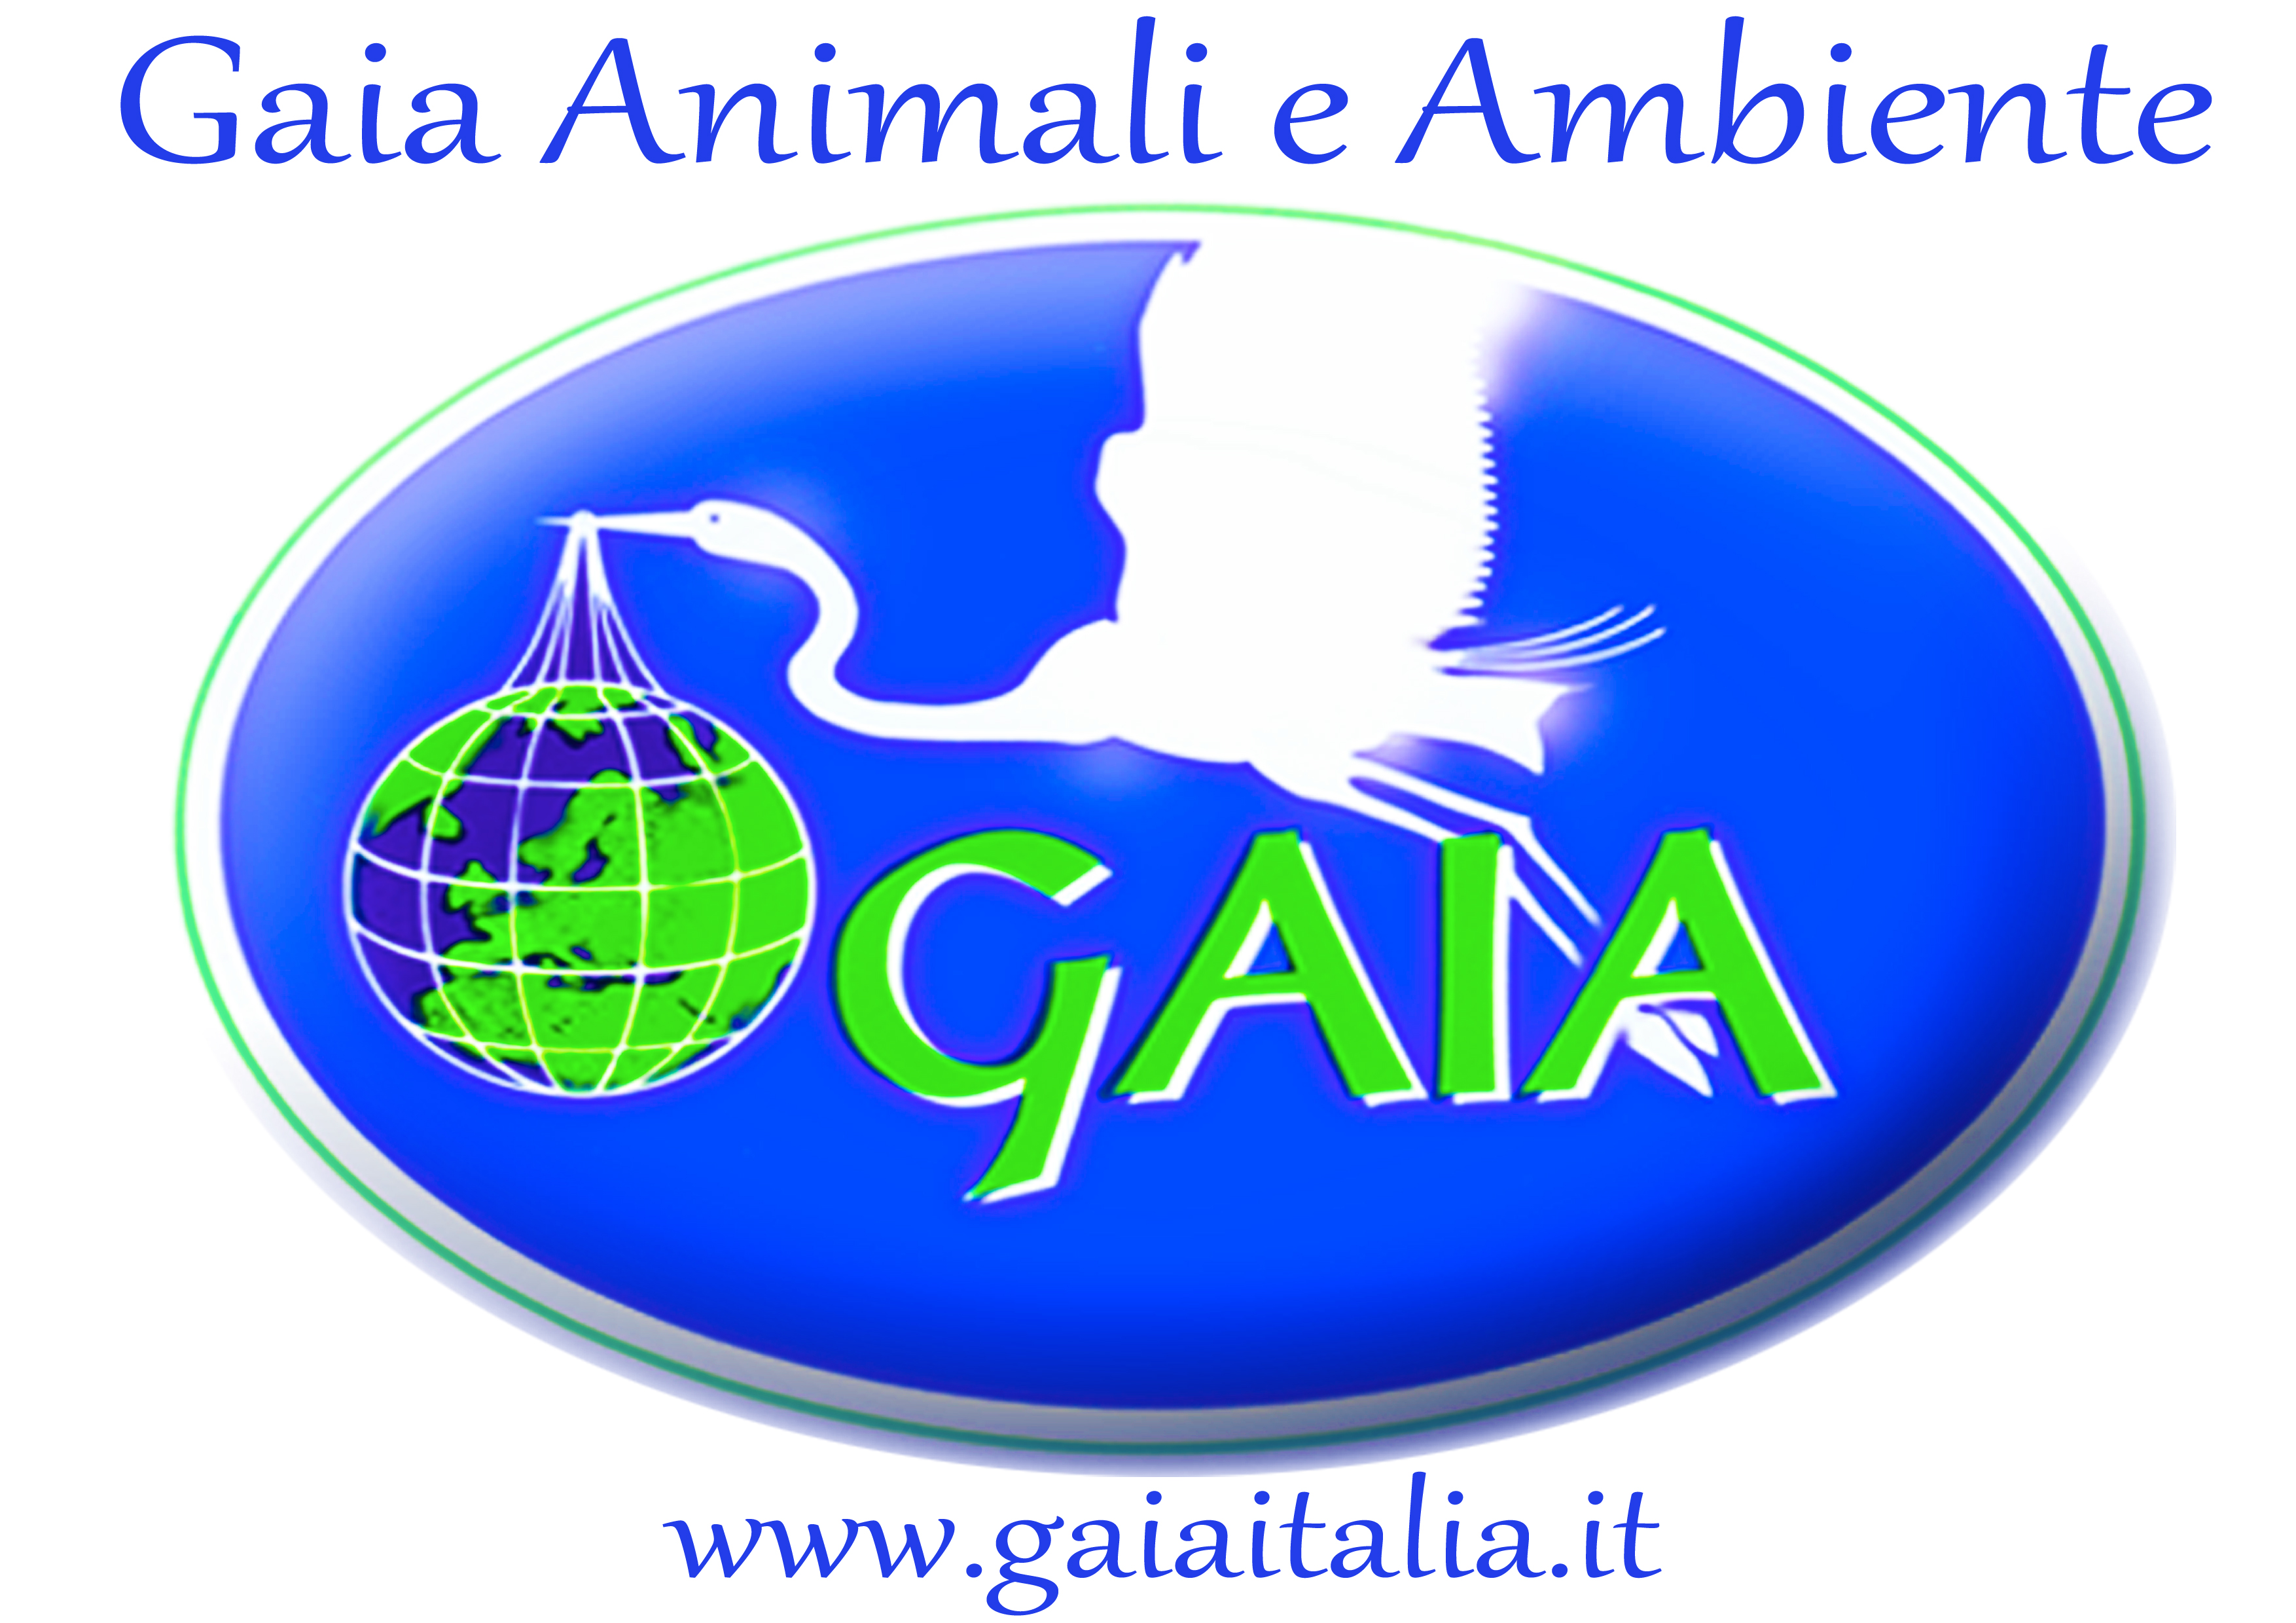 Gaia Animali e Ambiente logo